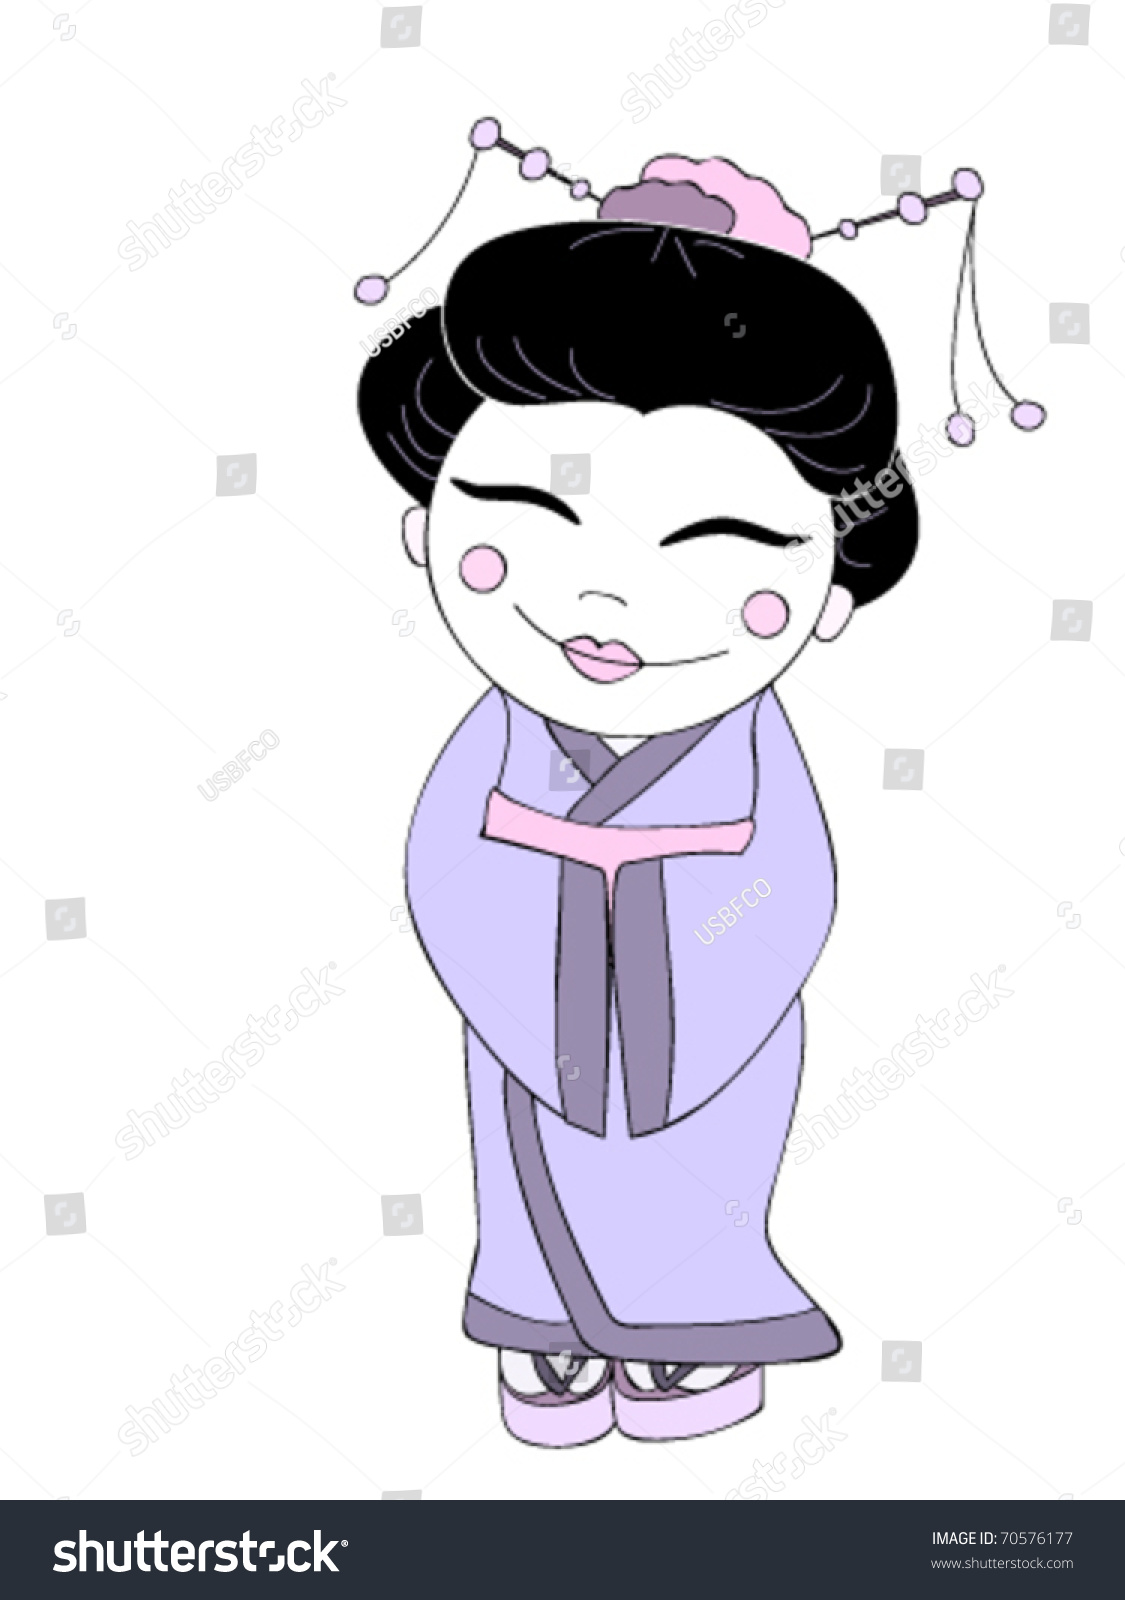 Vector Illustration Of A Japanese Geisha - 70576177 : Shutterstock